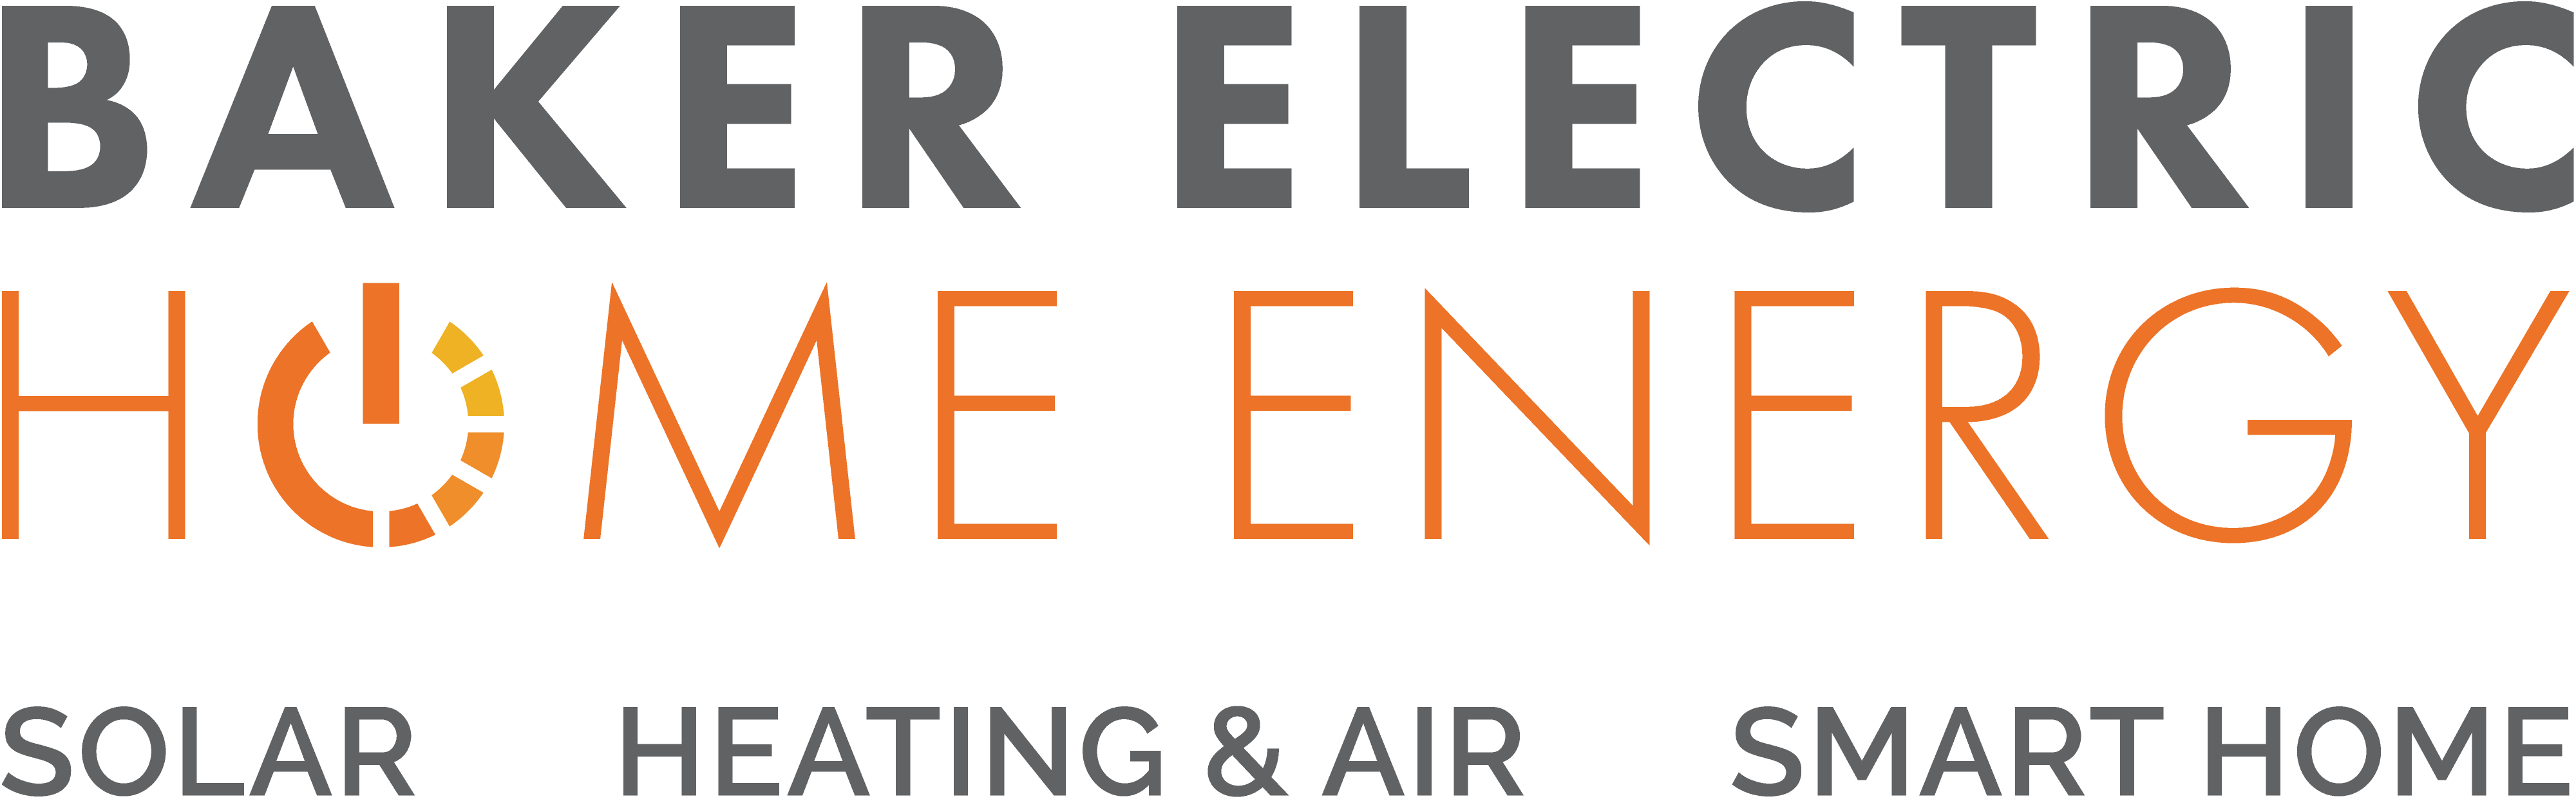 Baker Electric Home Energy Logo